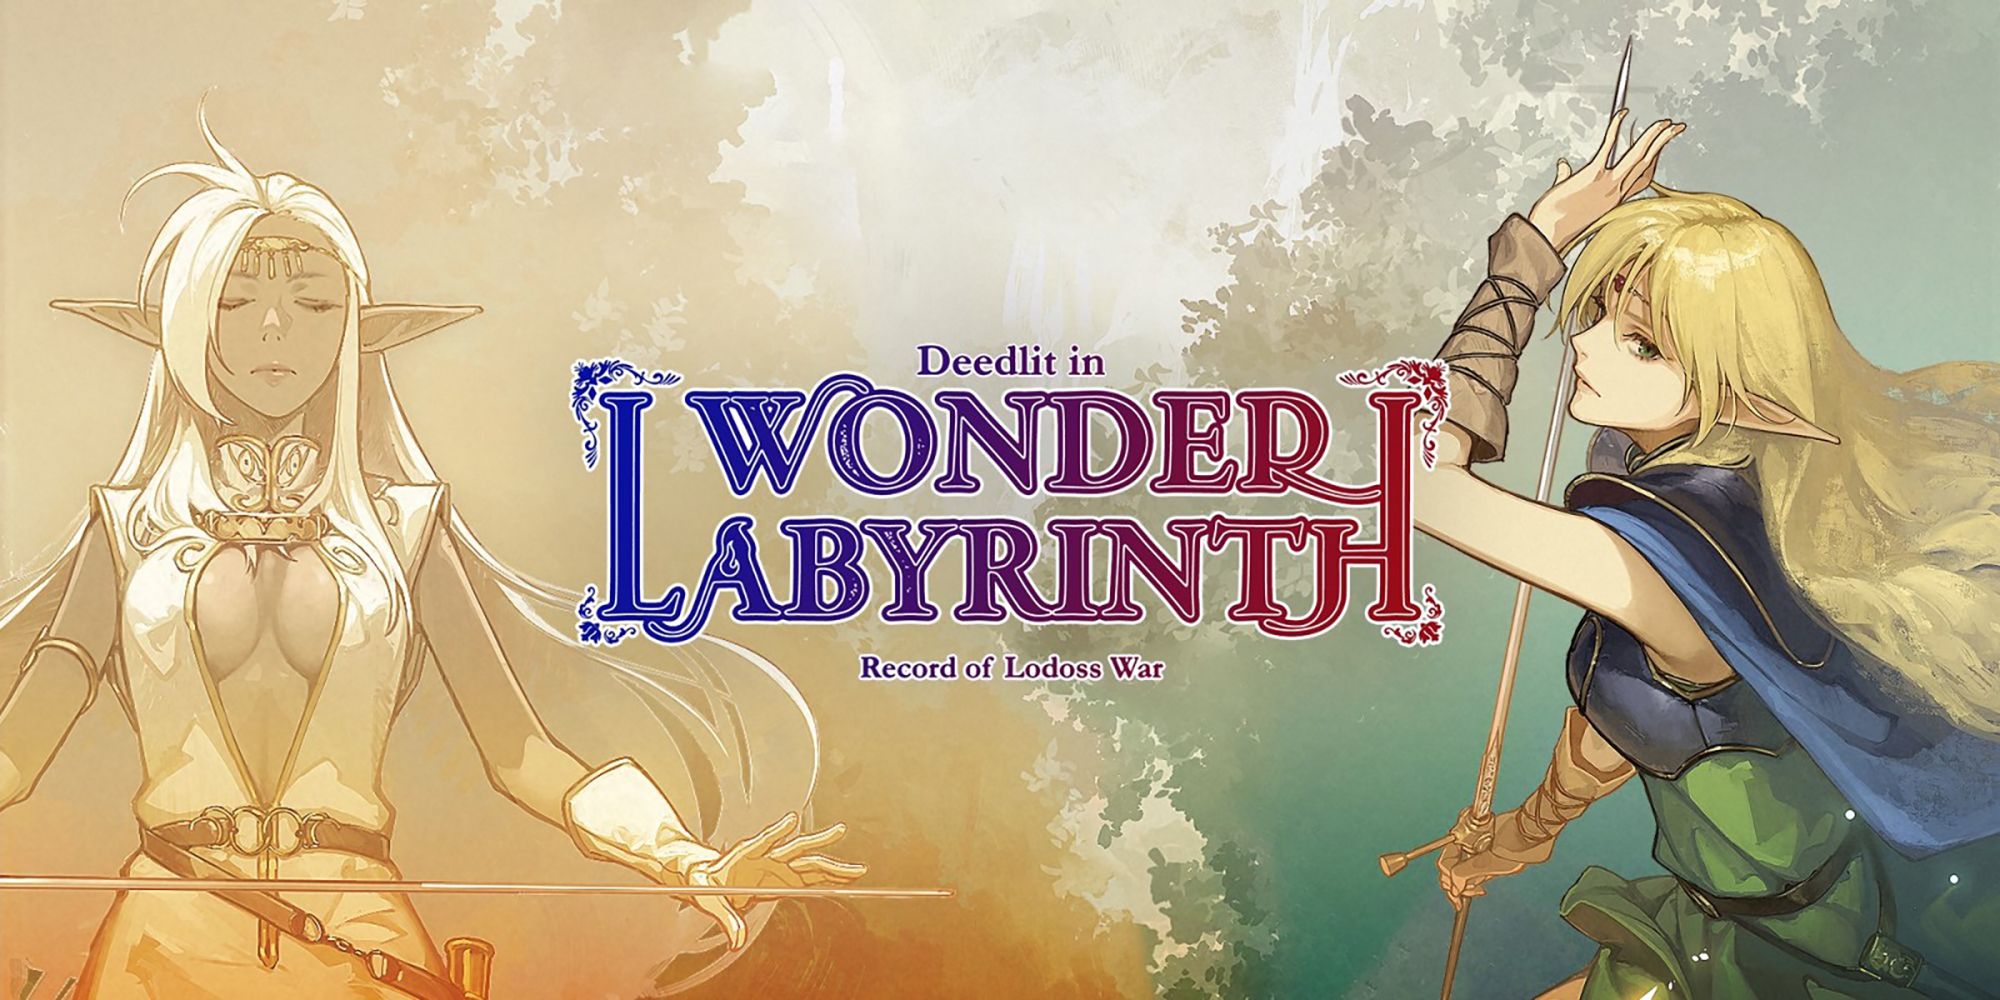 Deedlit in Wonder Labyrinth Poster